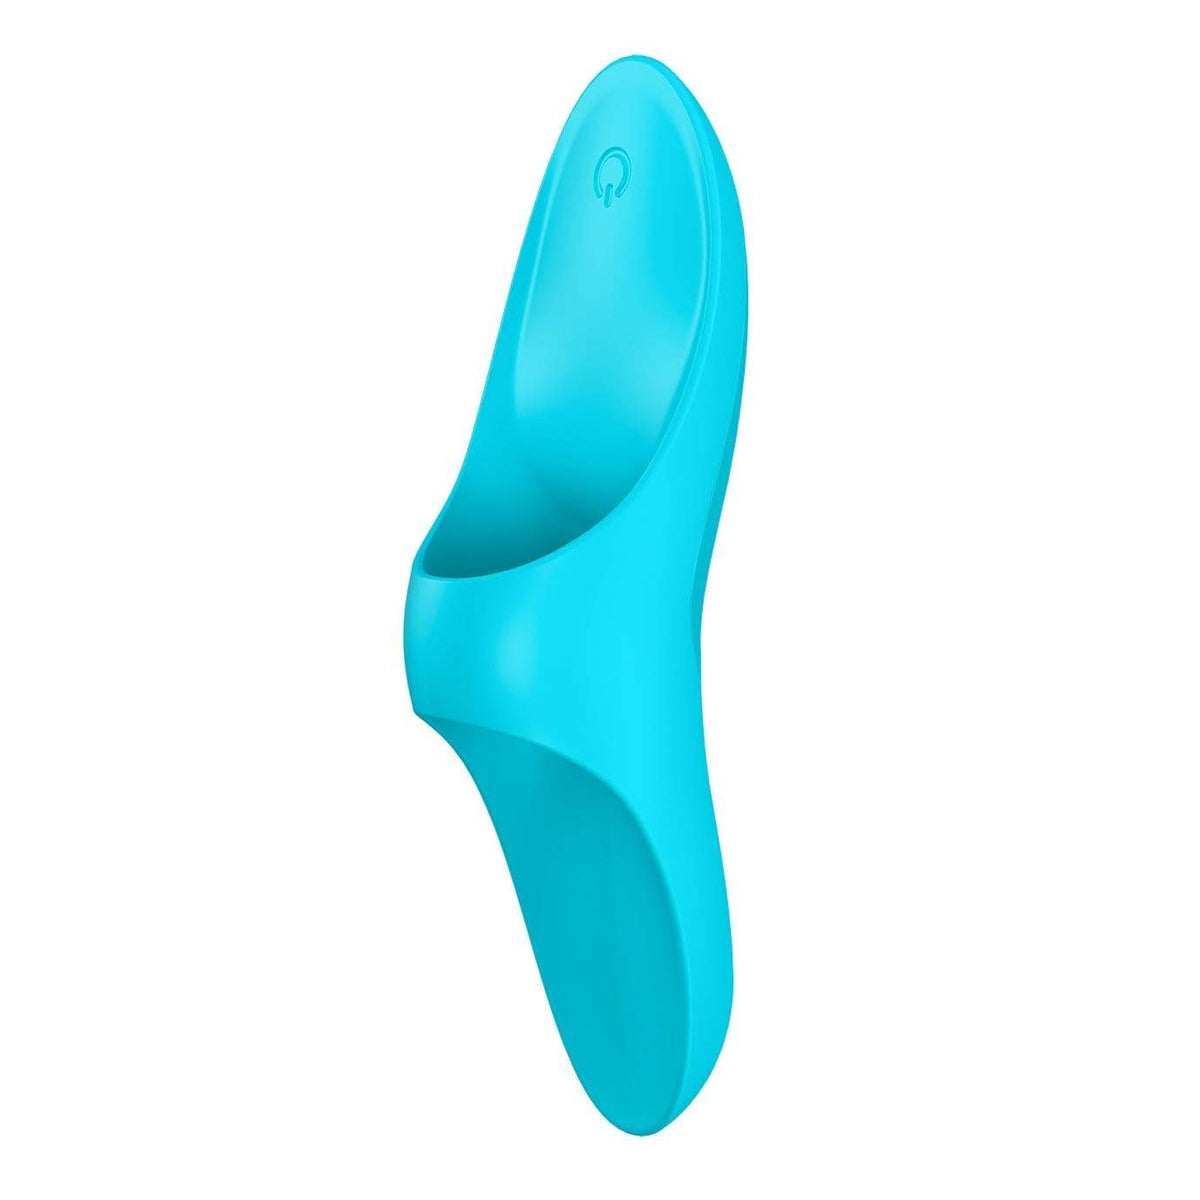 Satisfyer - Teaser Finger Vibrator (Light Blue)    Clit Massager (Vibration) Rechargeable